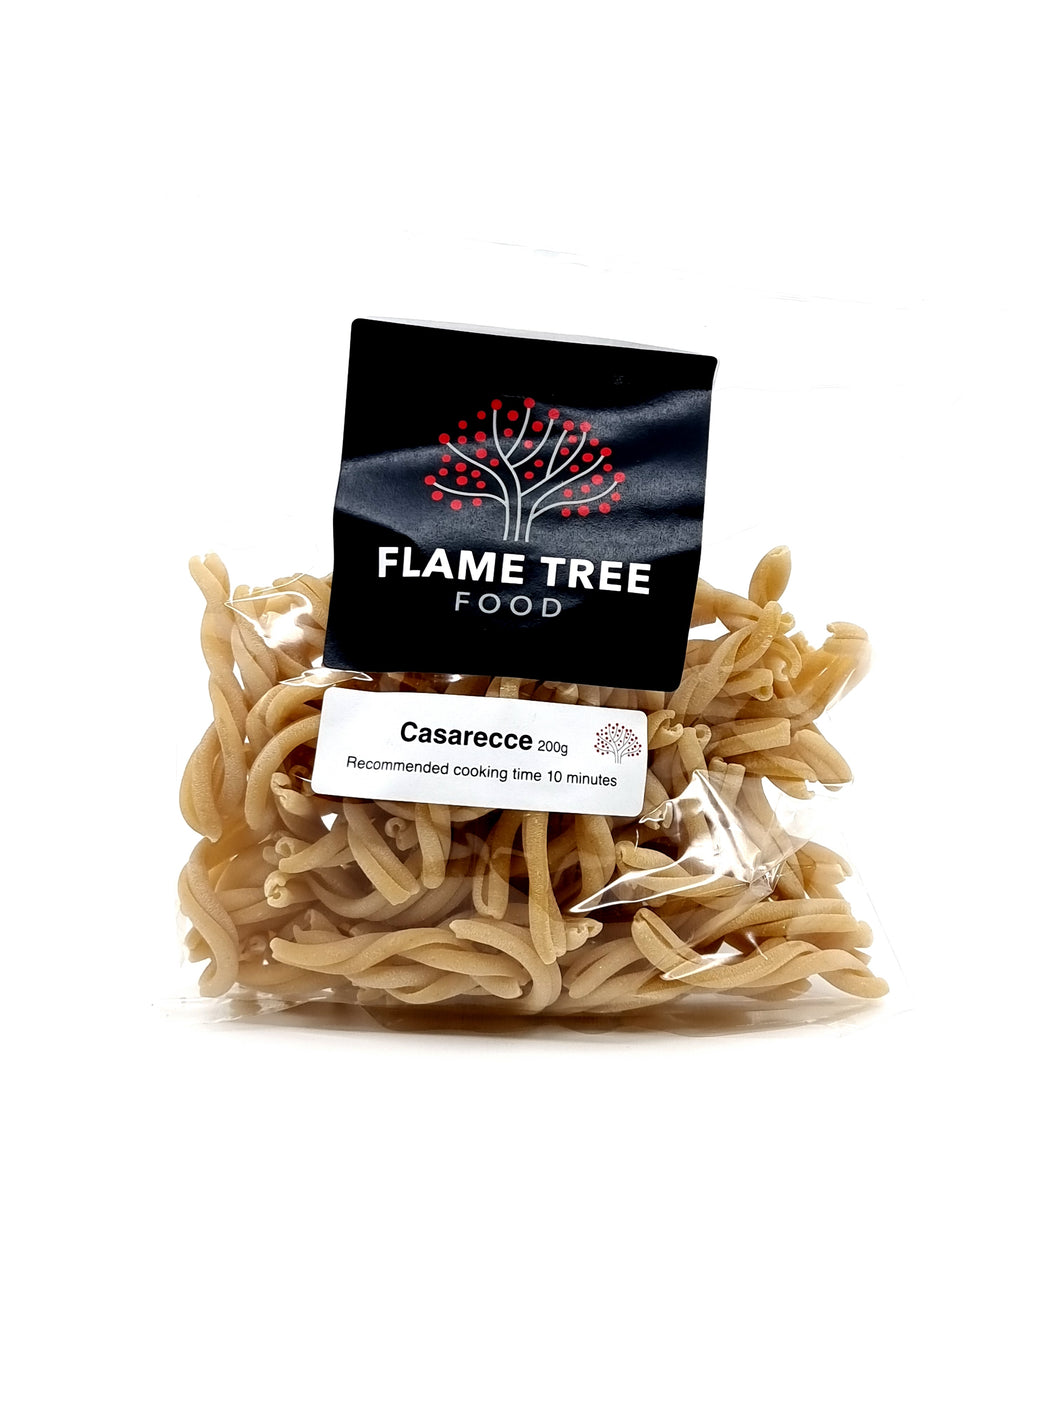 Flame Tree Food Casarecce 200g